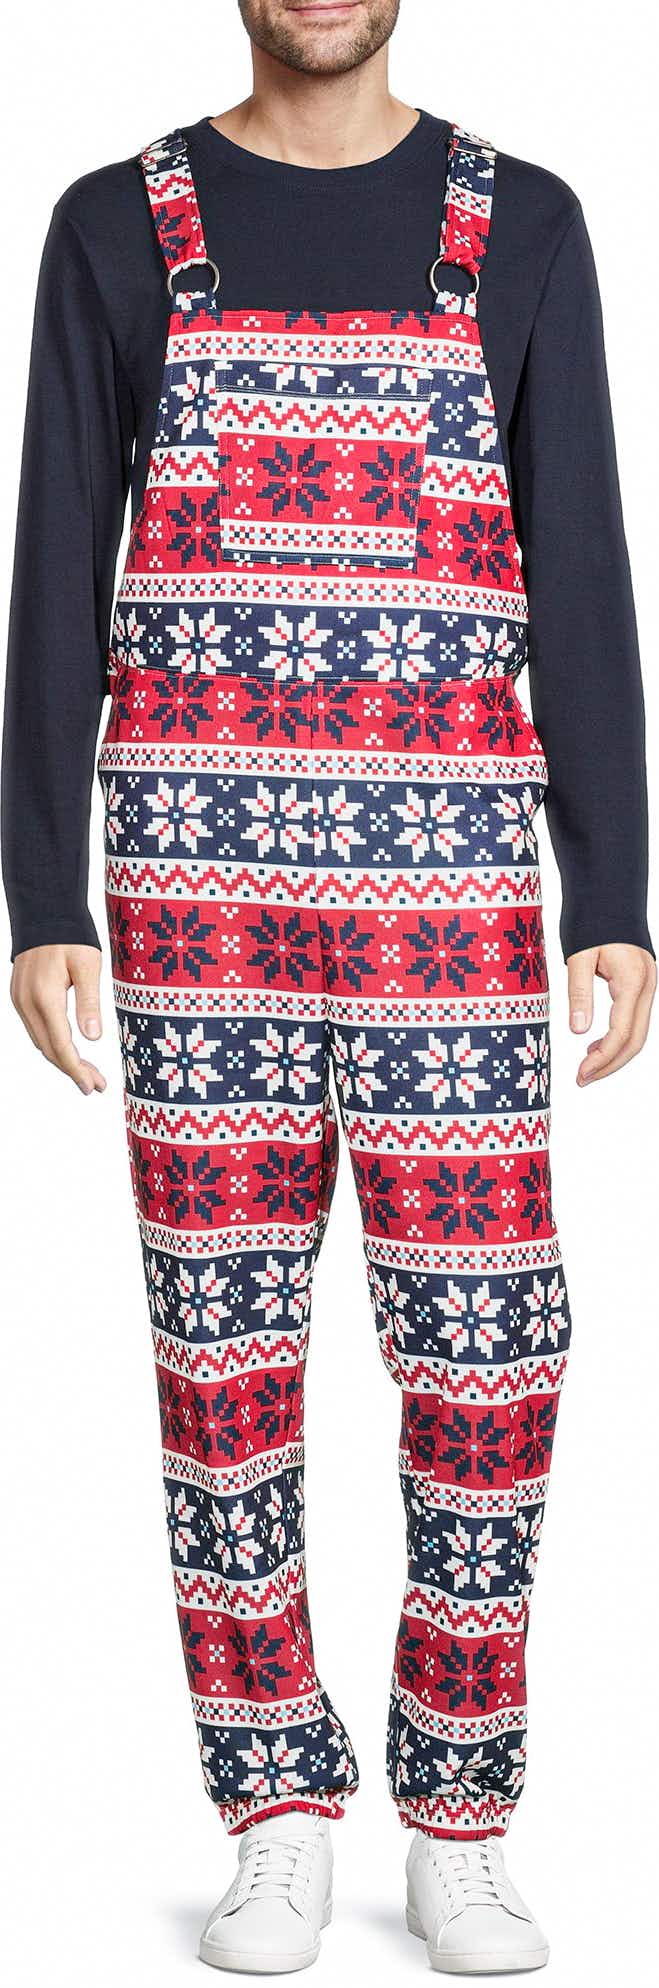 walmart holiday matching jamerall pajamas screenshot